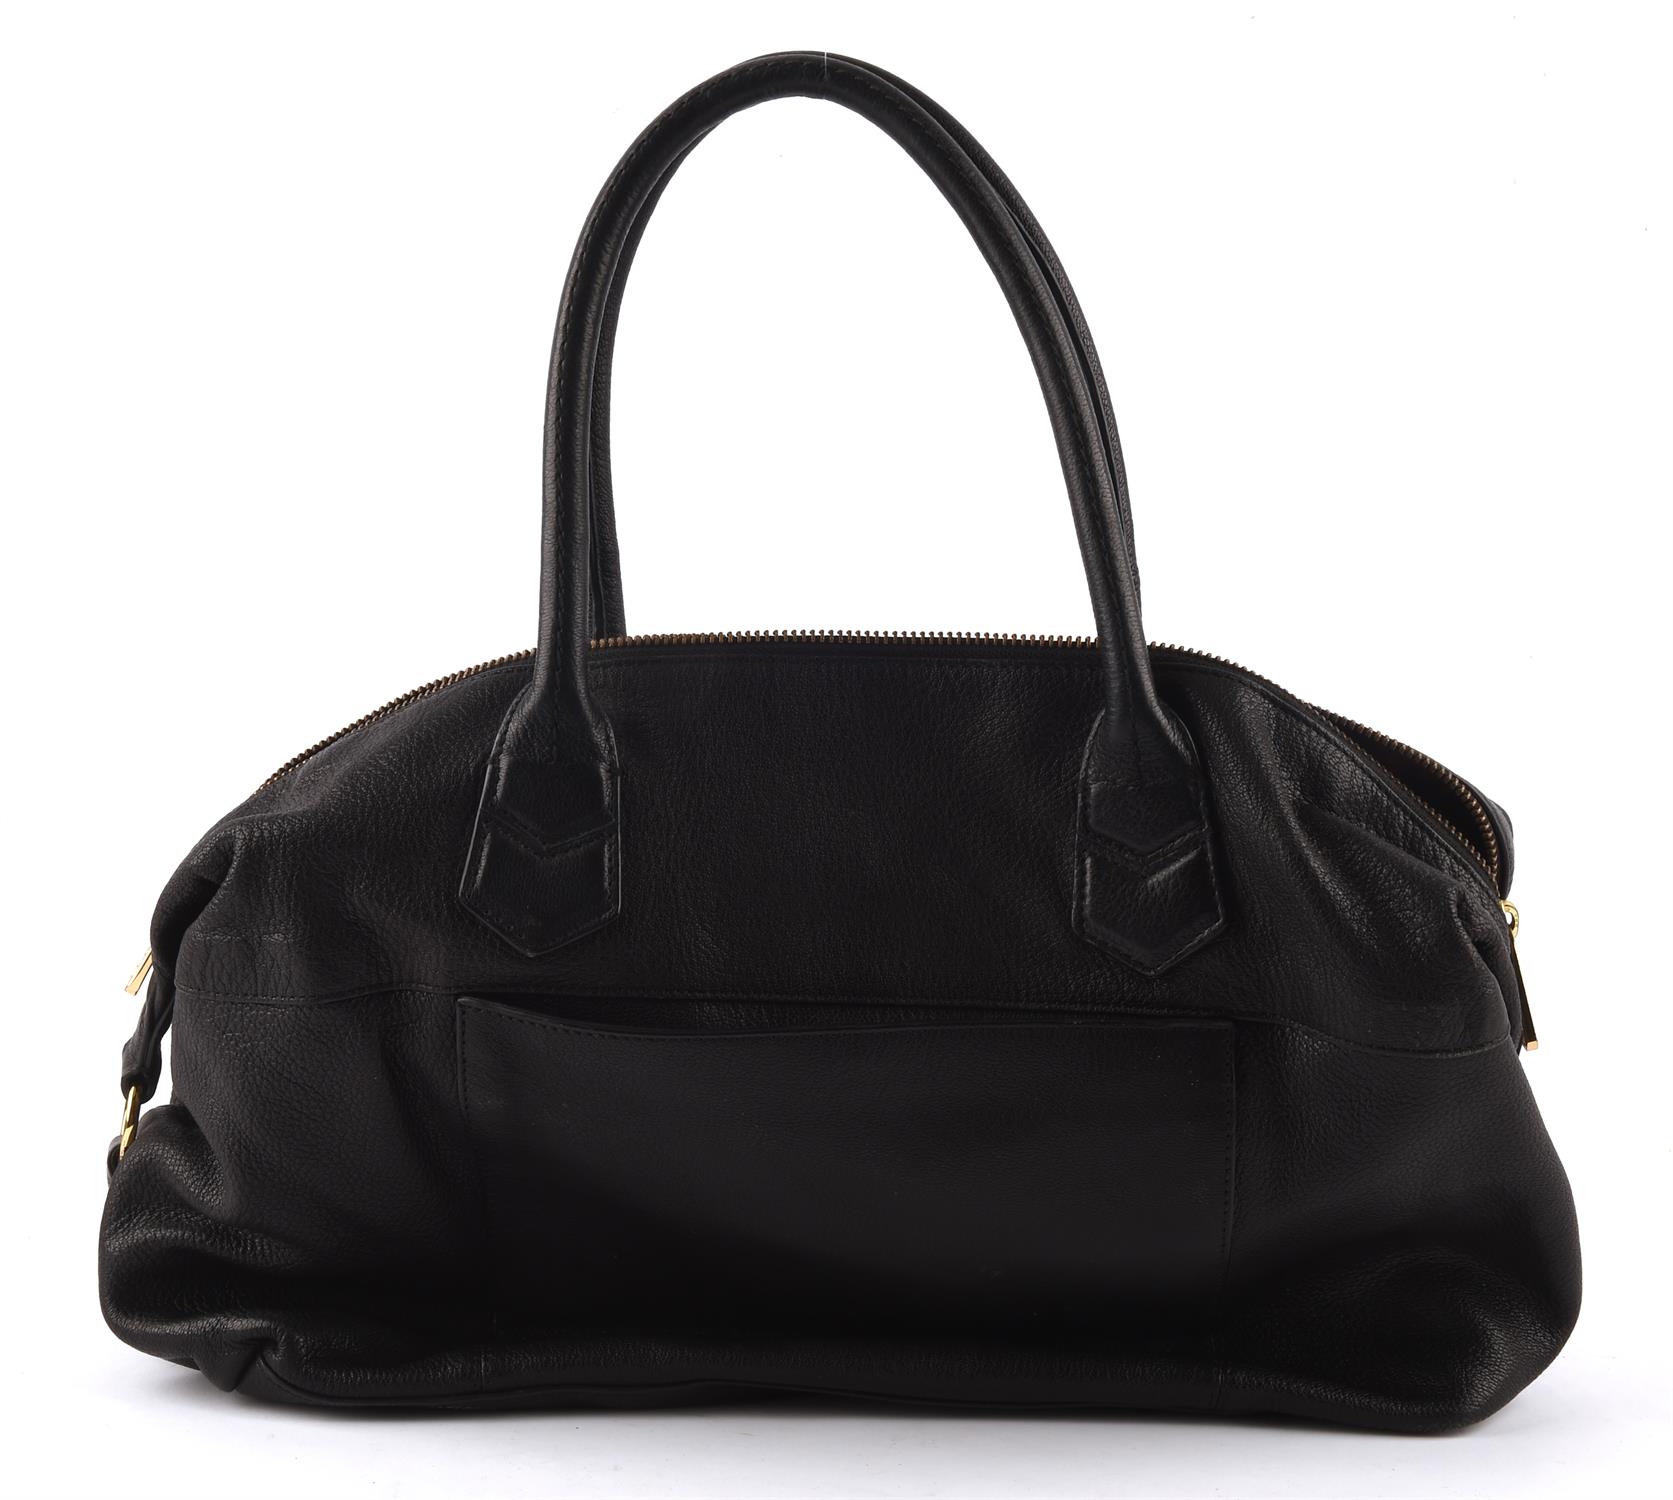 RALPH LAUREN black leather handbag (45cm x 27cm x 13cm) gold coloured hardware - Image 2 of 3